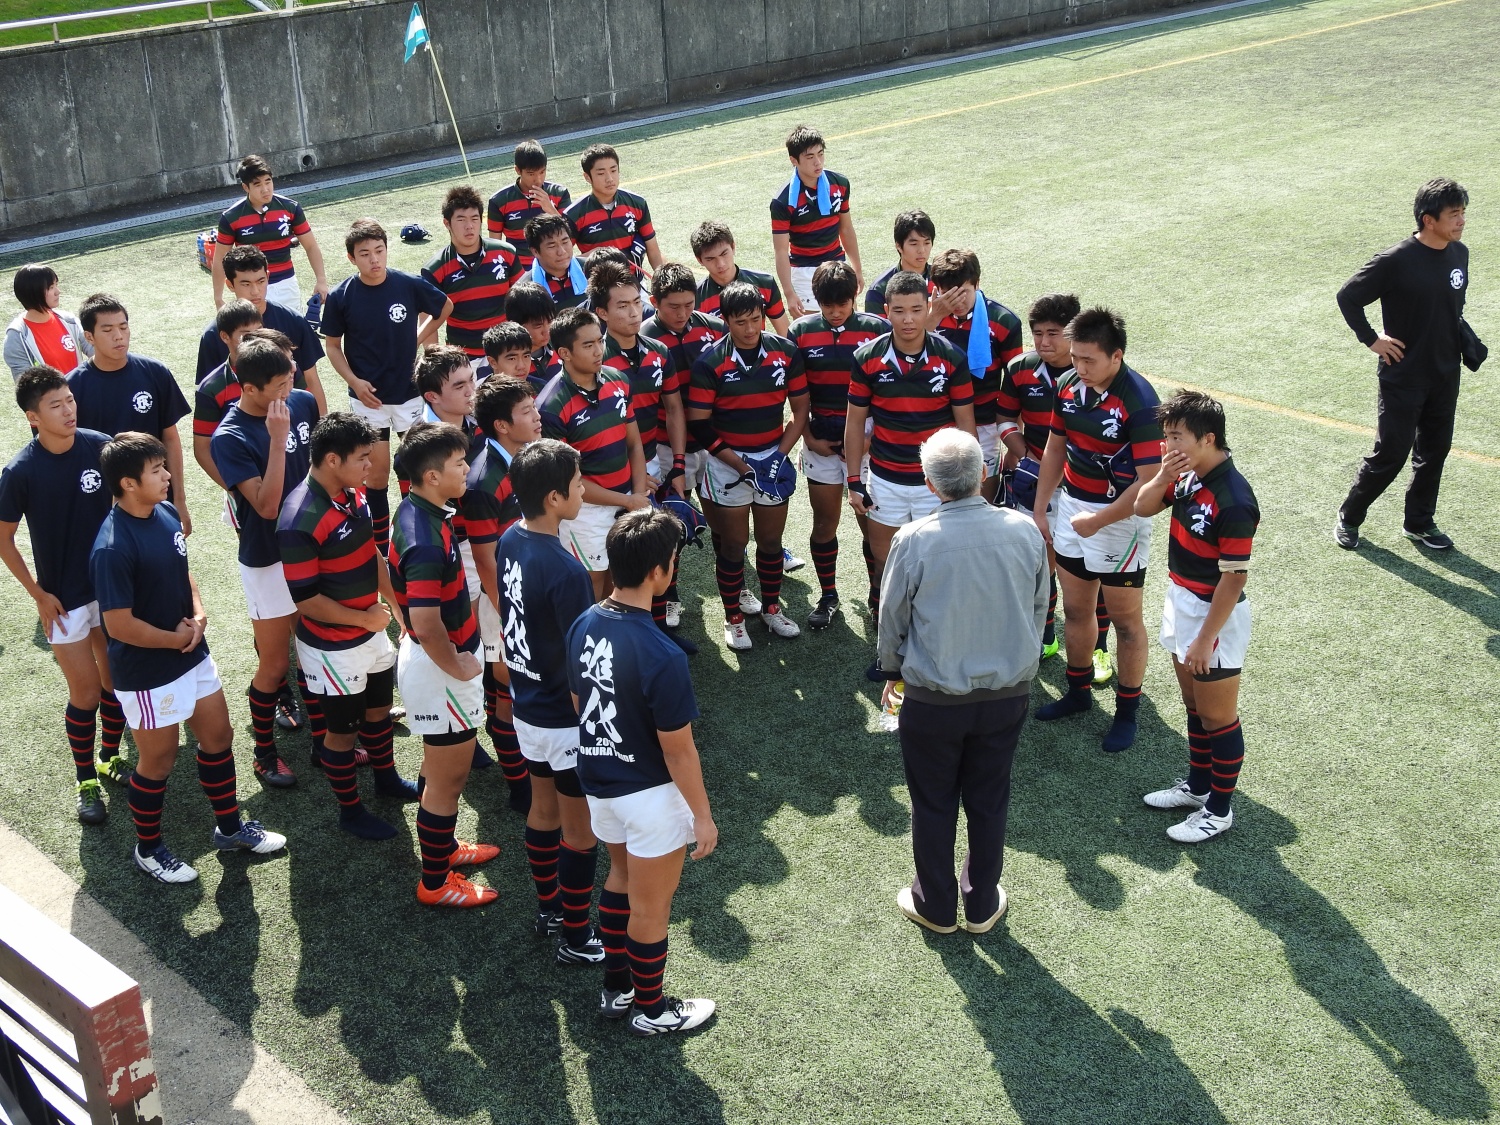 http://kokura-rugby.sakura.ne.jp/DSCN8503_xlarge.JPG